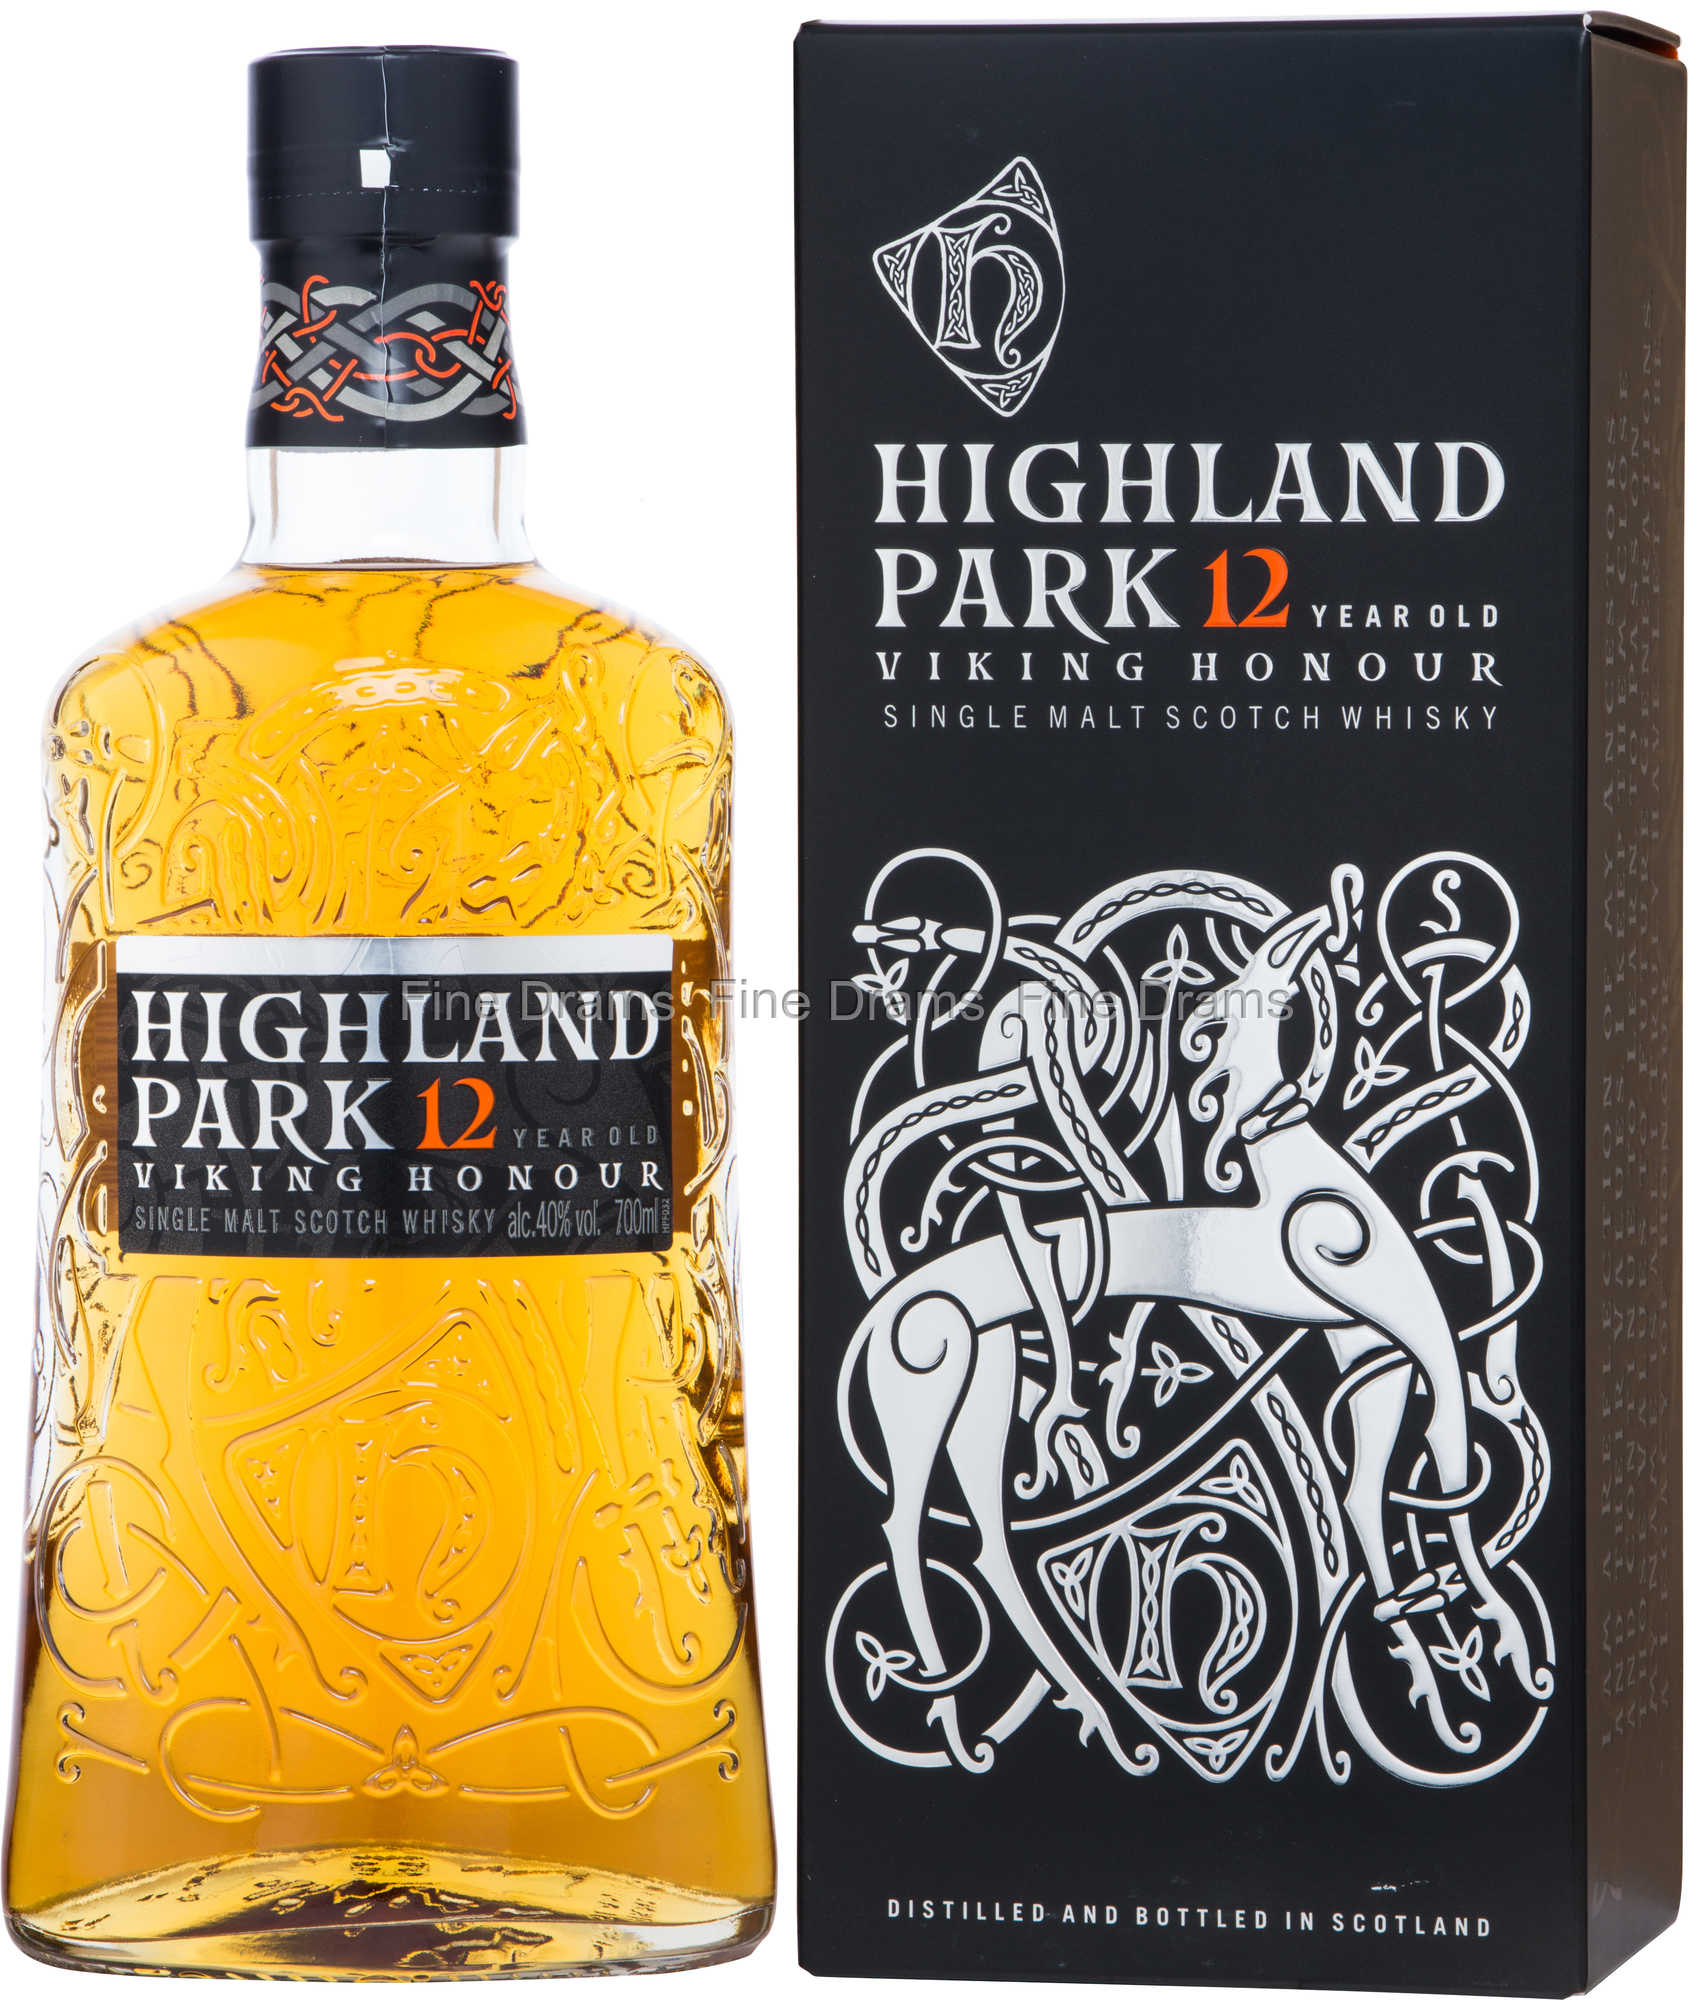 https://images.finedrams.com/image/33614-large-1512777171/highland-park-12-year-old-whisky-viking-honour.jpg